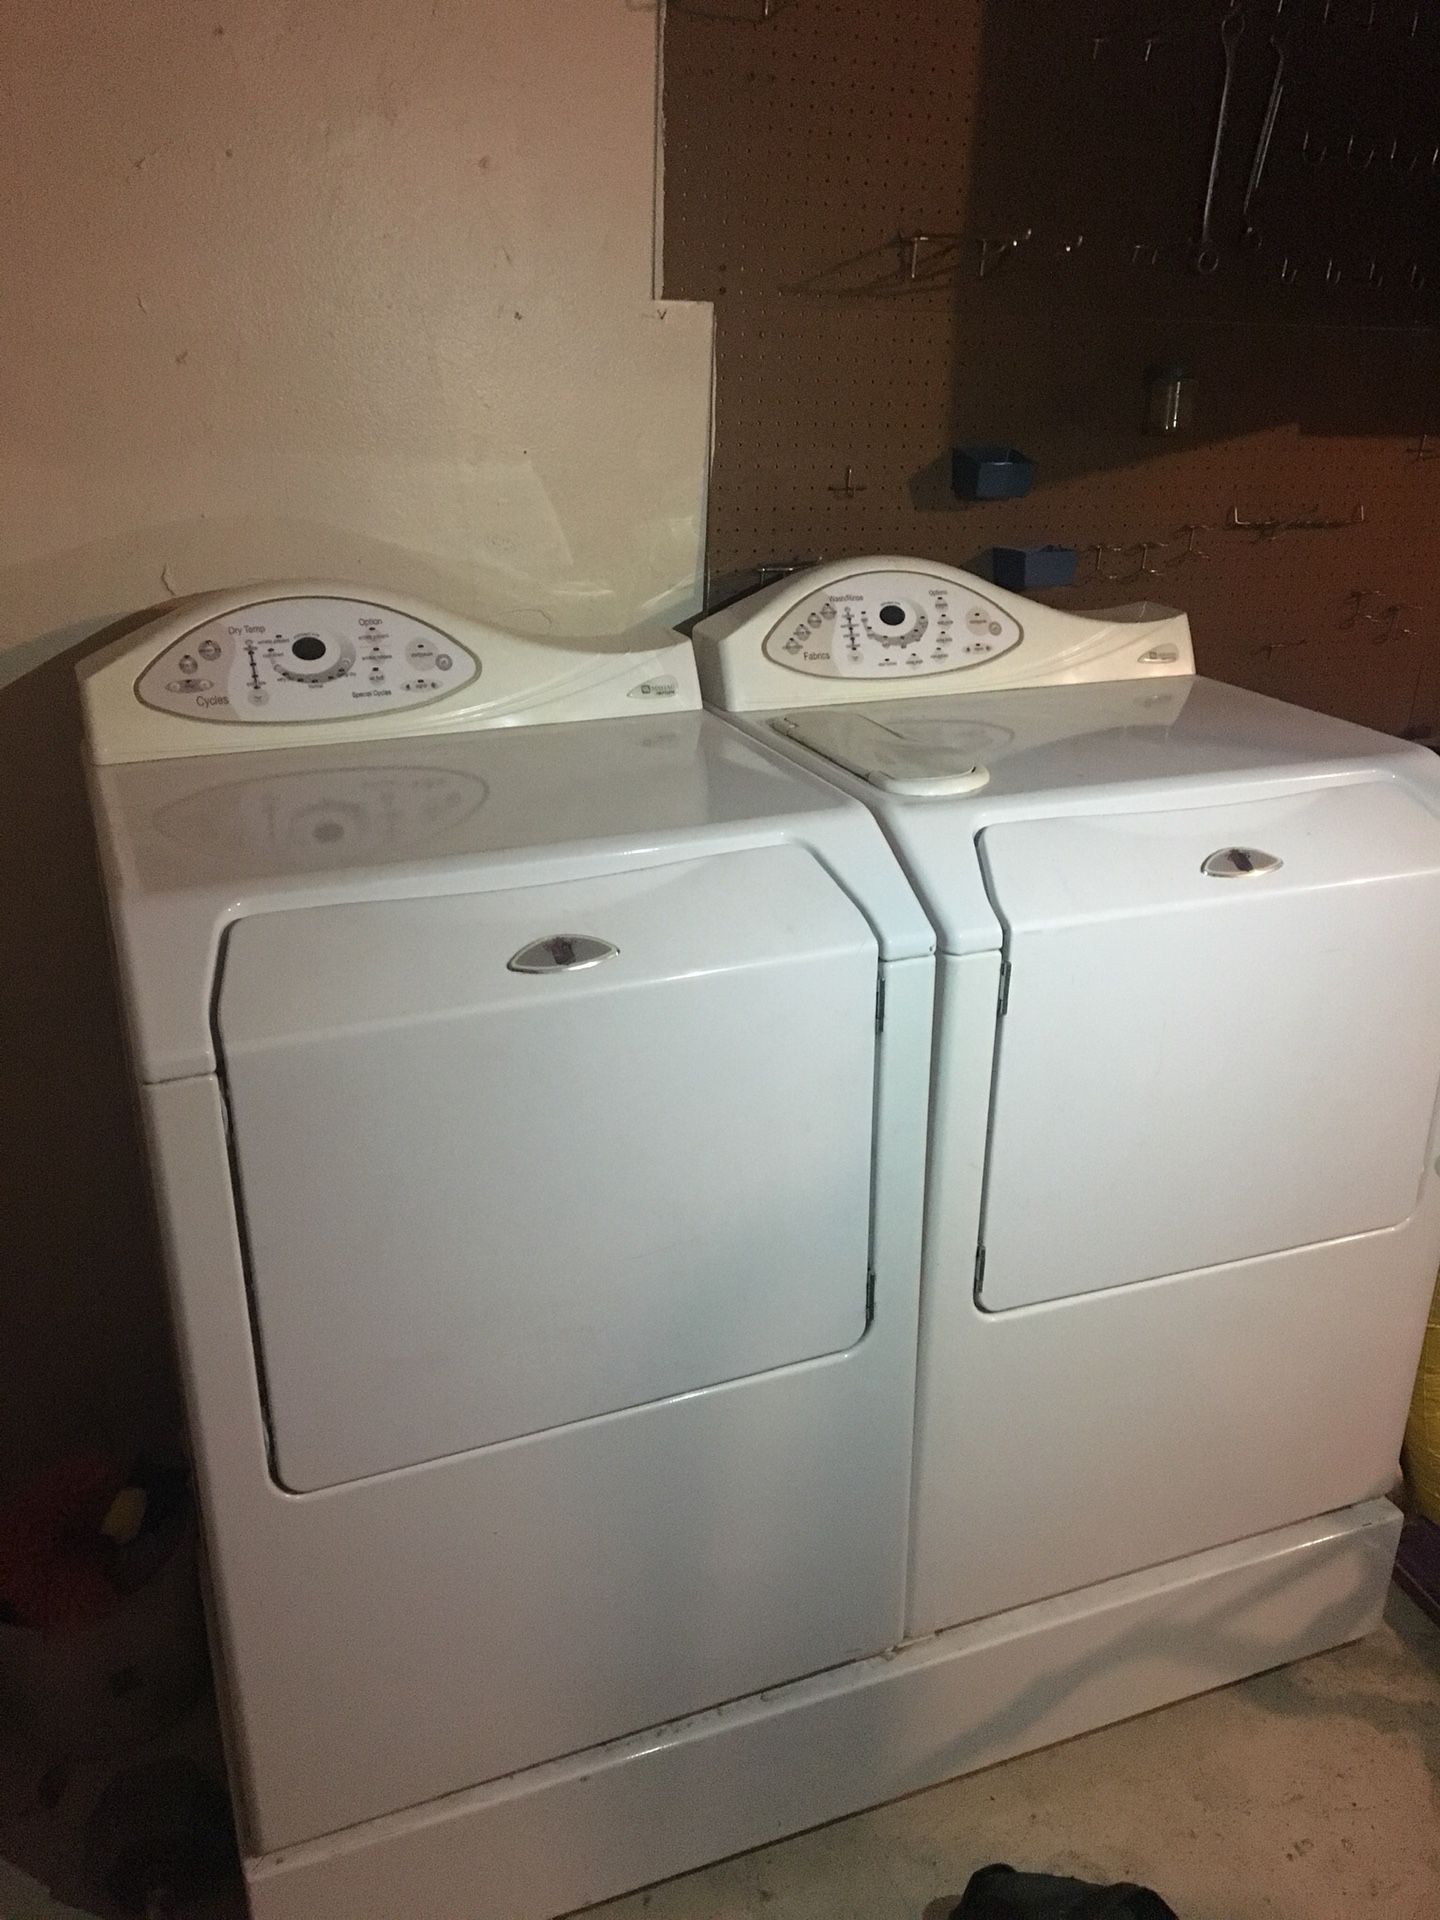 Maytag Neptune Washing machine and electric dryer